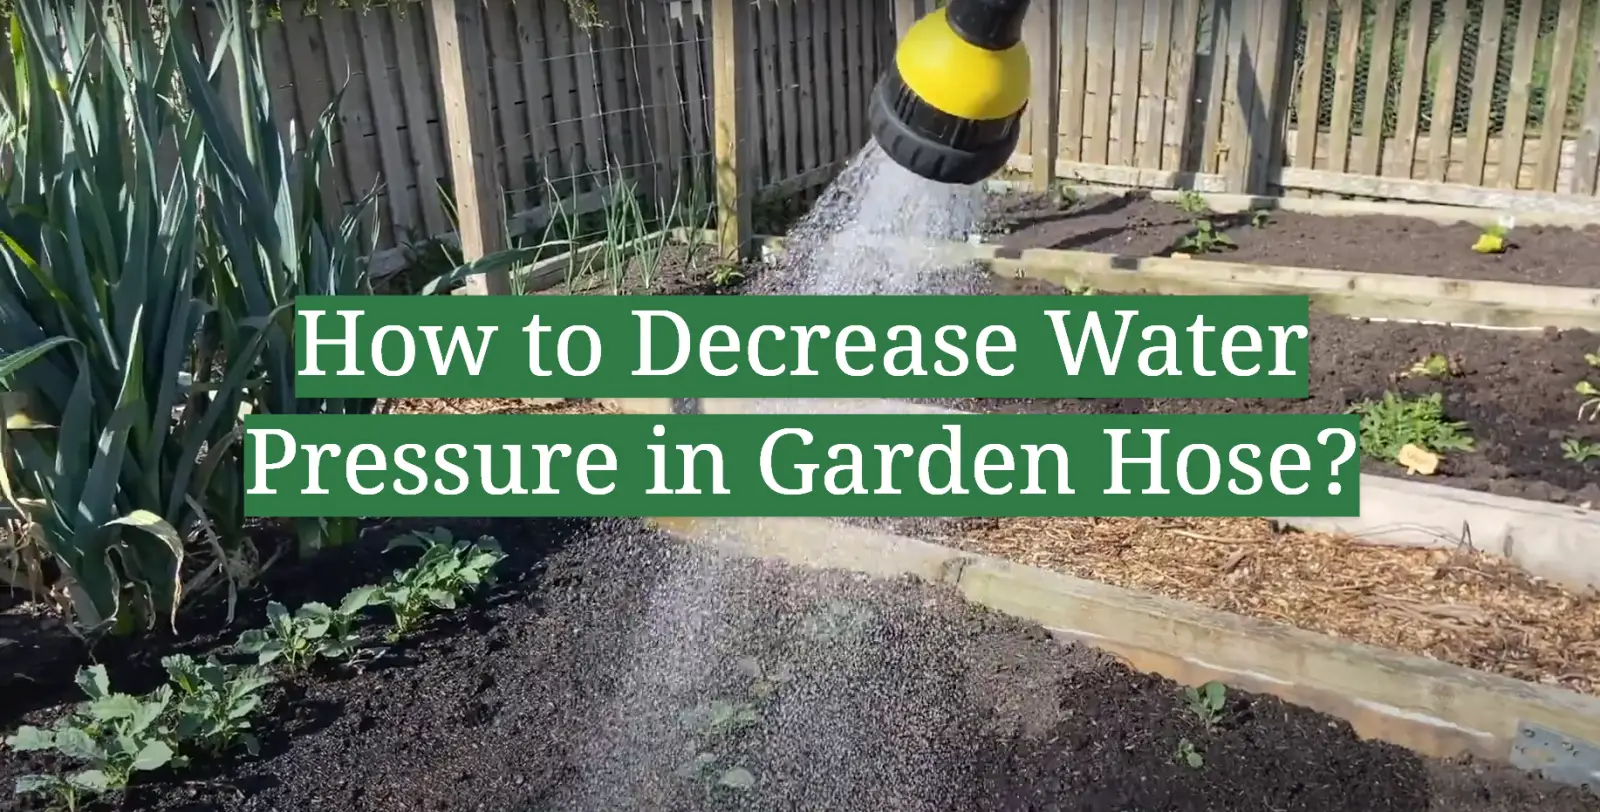 How to Decrease Water Pressure in Garden Hose?